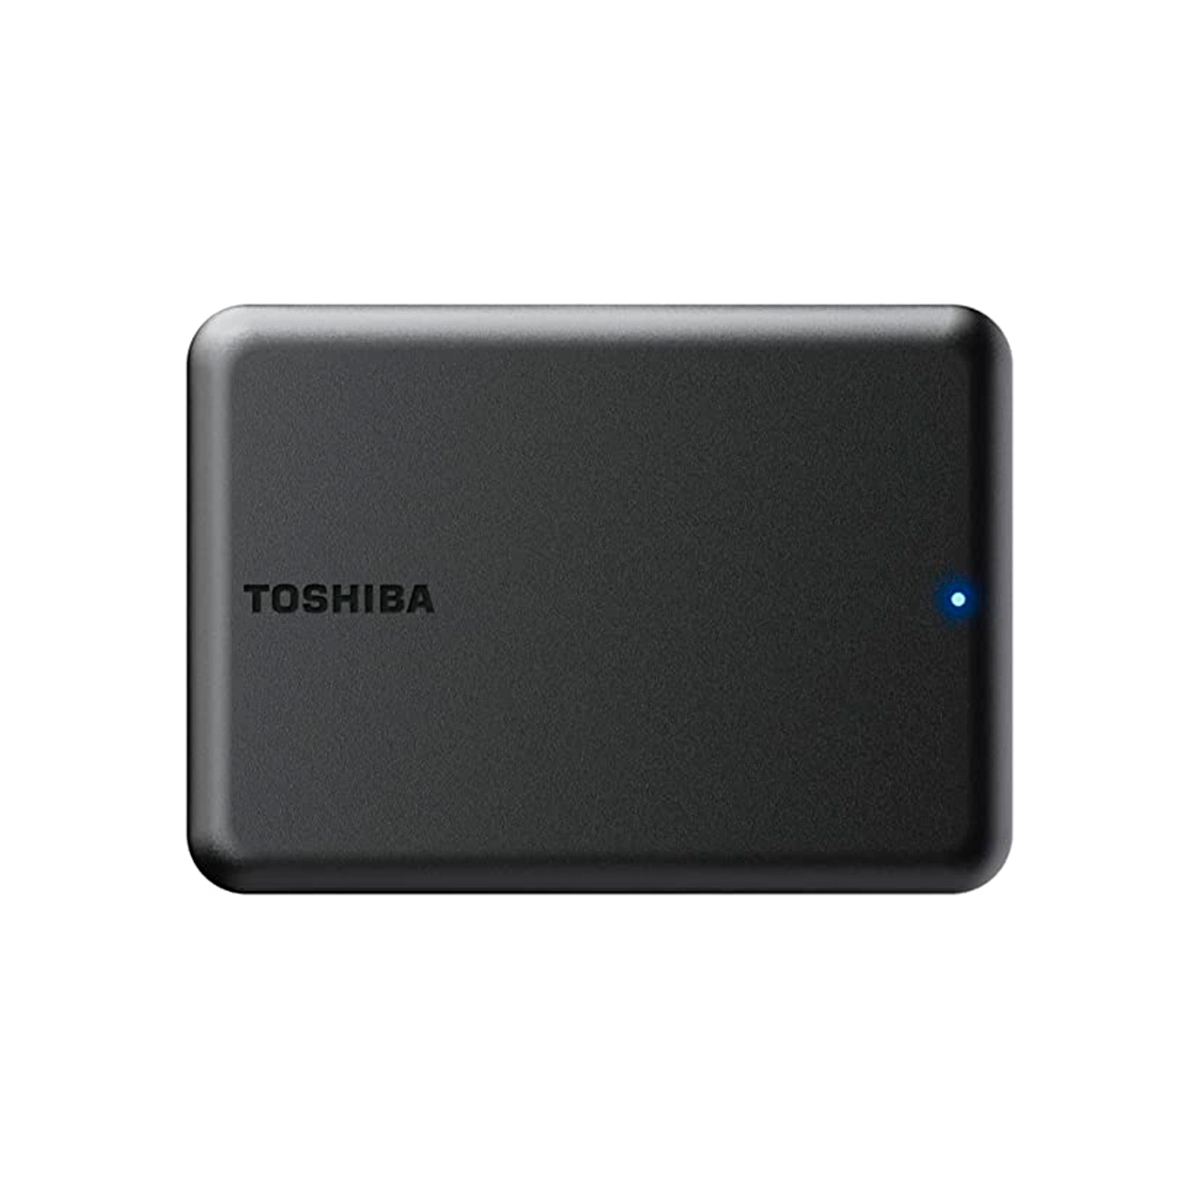 Disco Duro Externo HDD Toshiba Basics 1TB